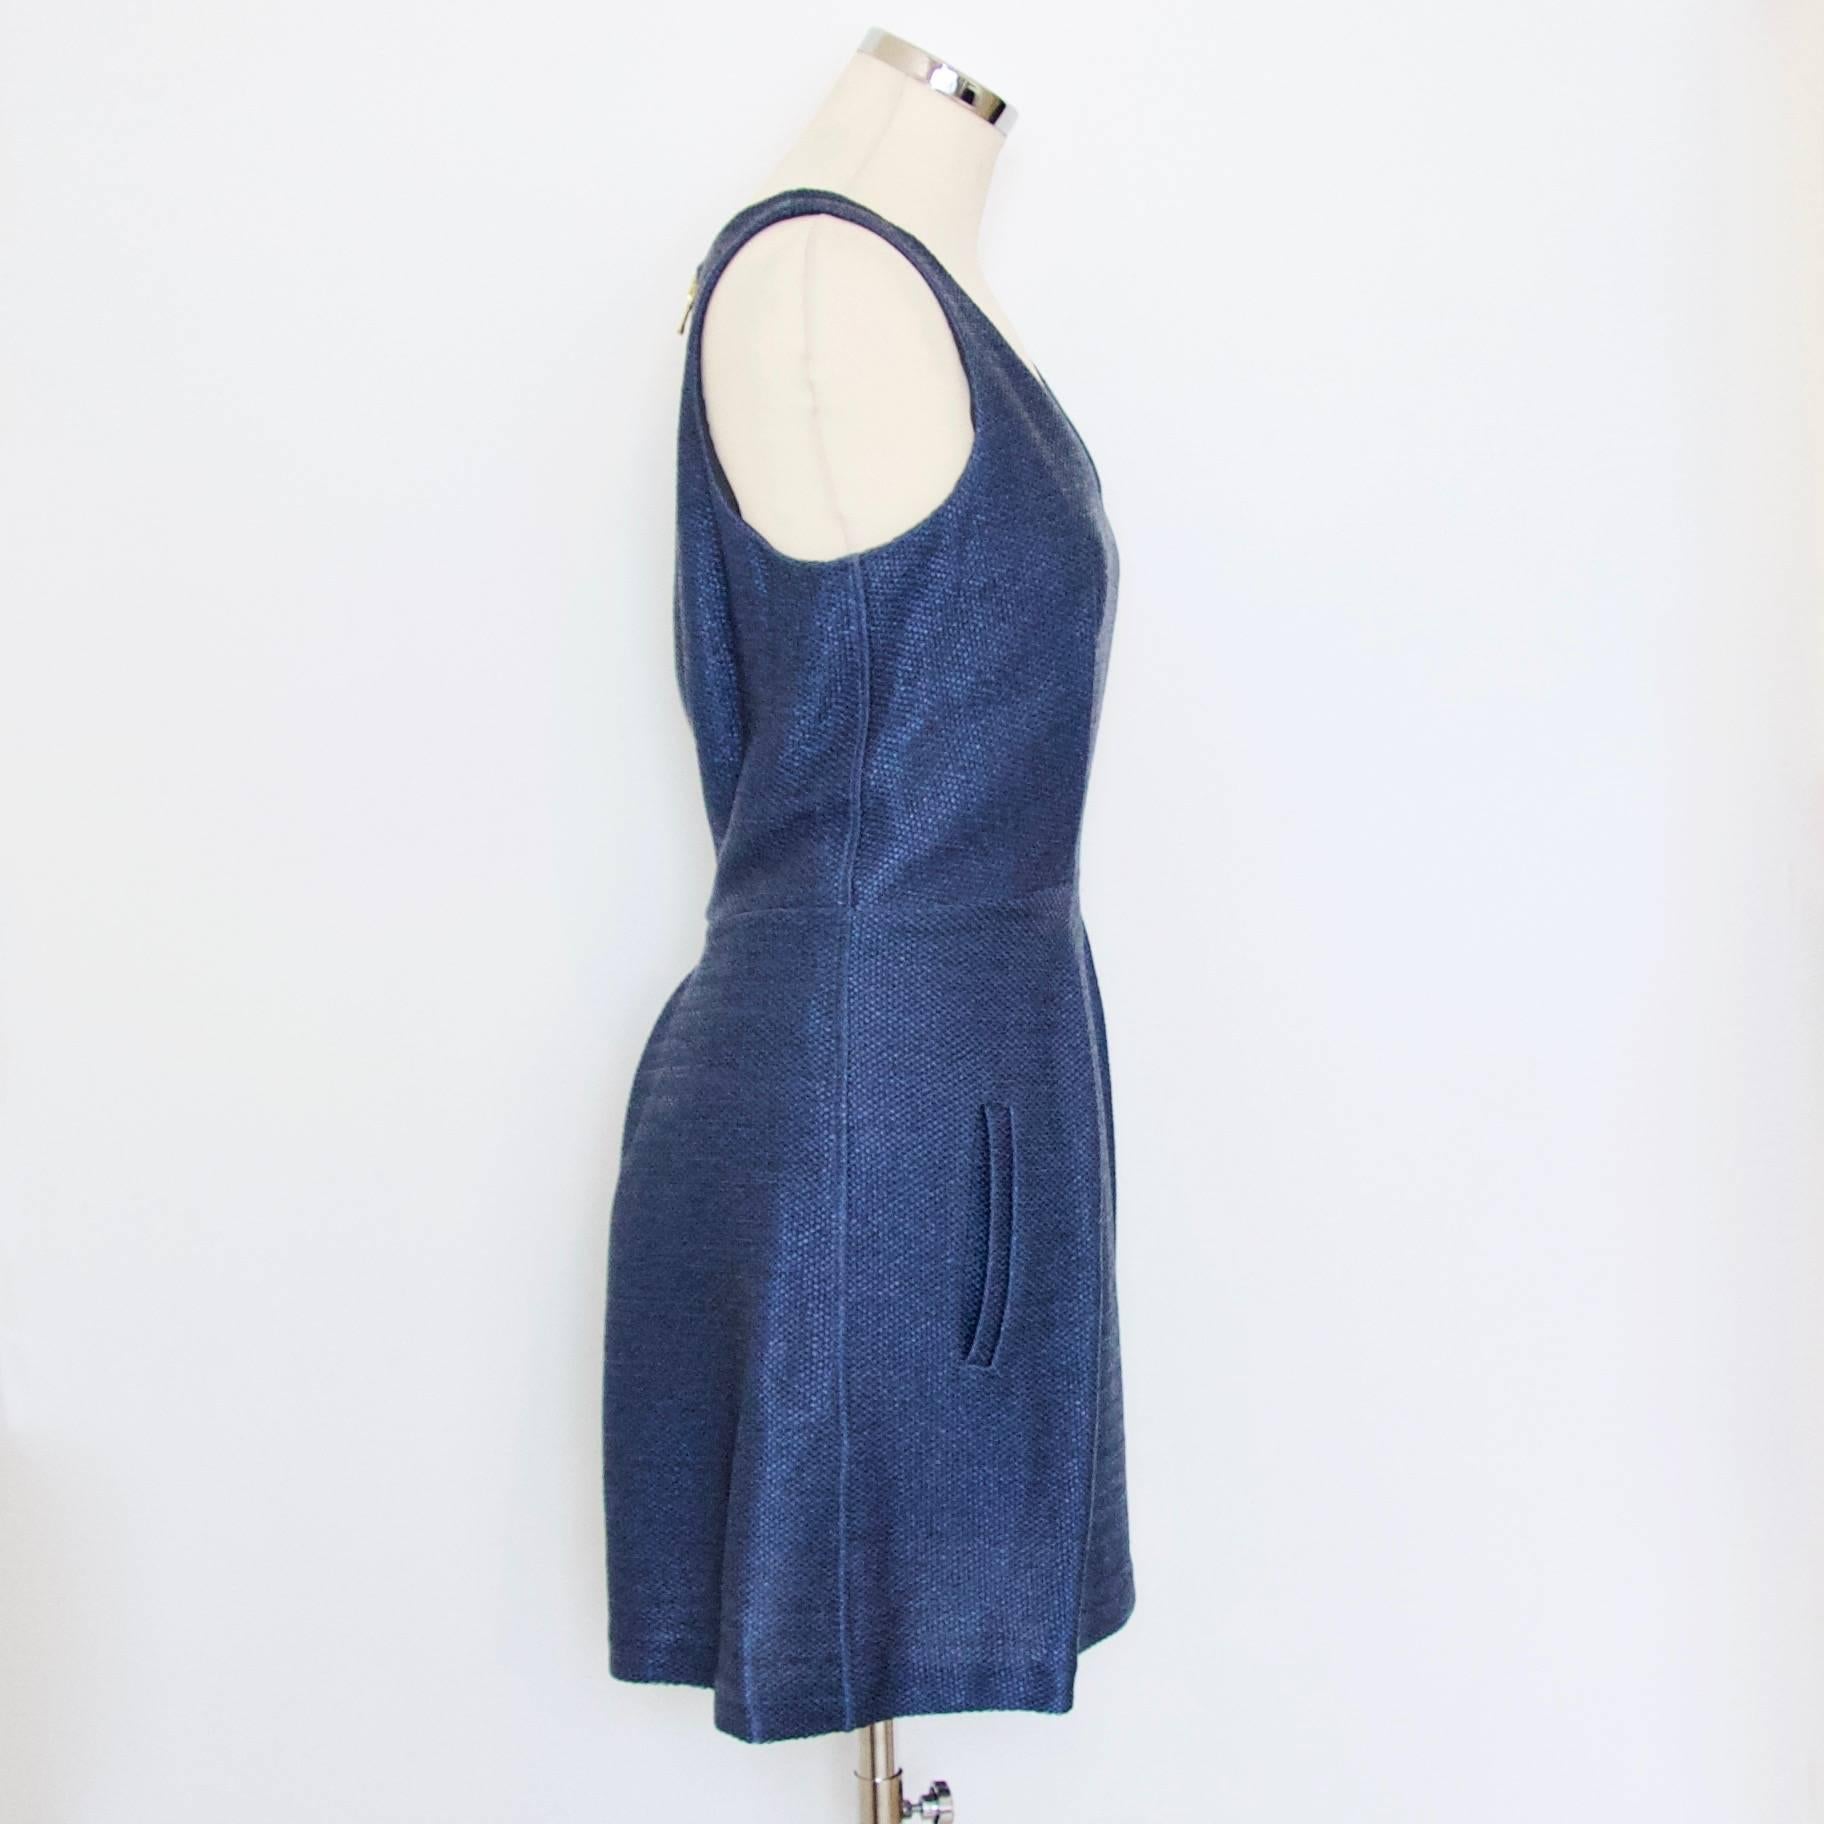 Balenciaga blue dress

Size: 38